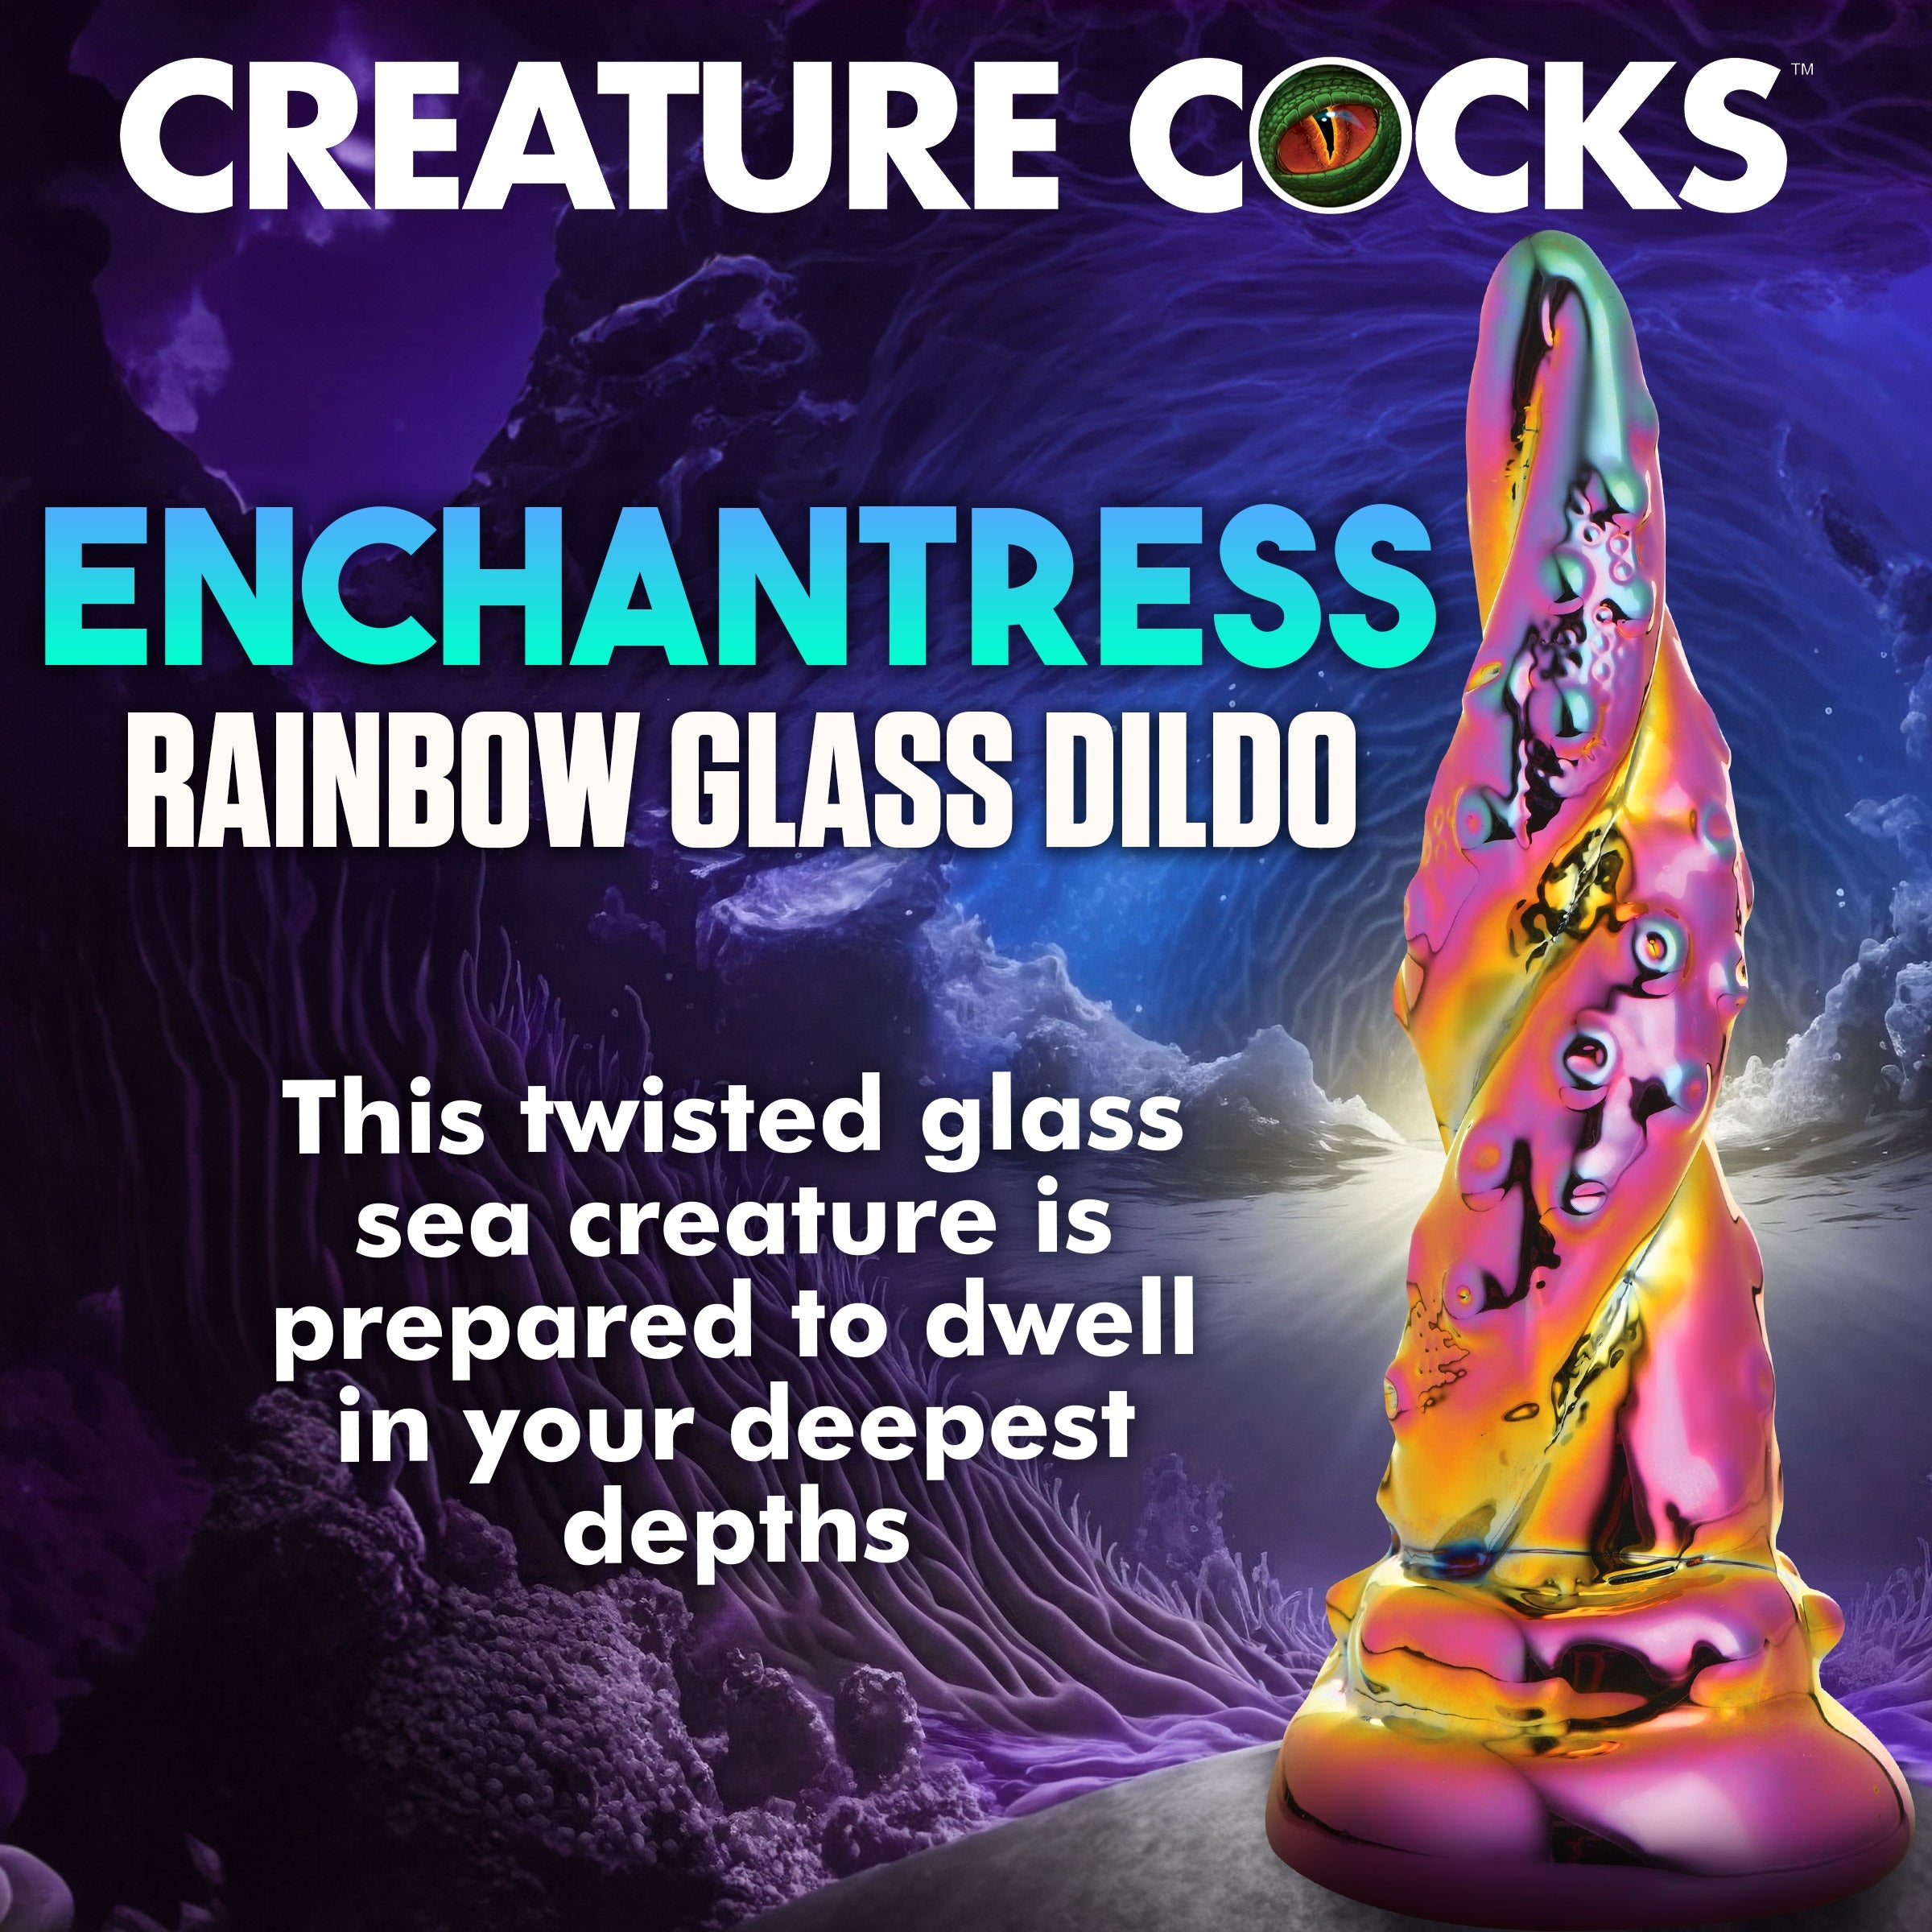 Enchantress Rainbow Glass Dildo